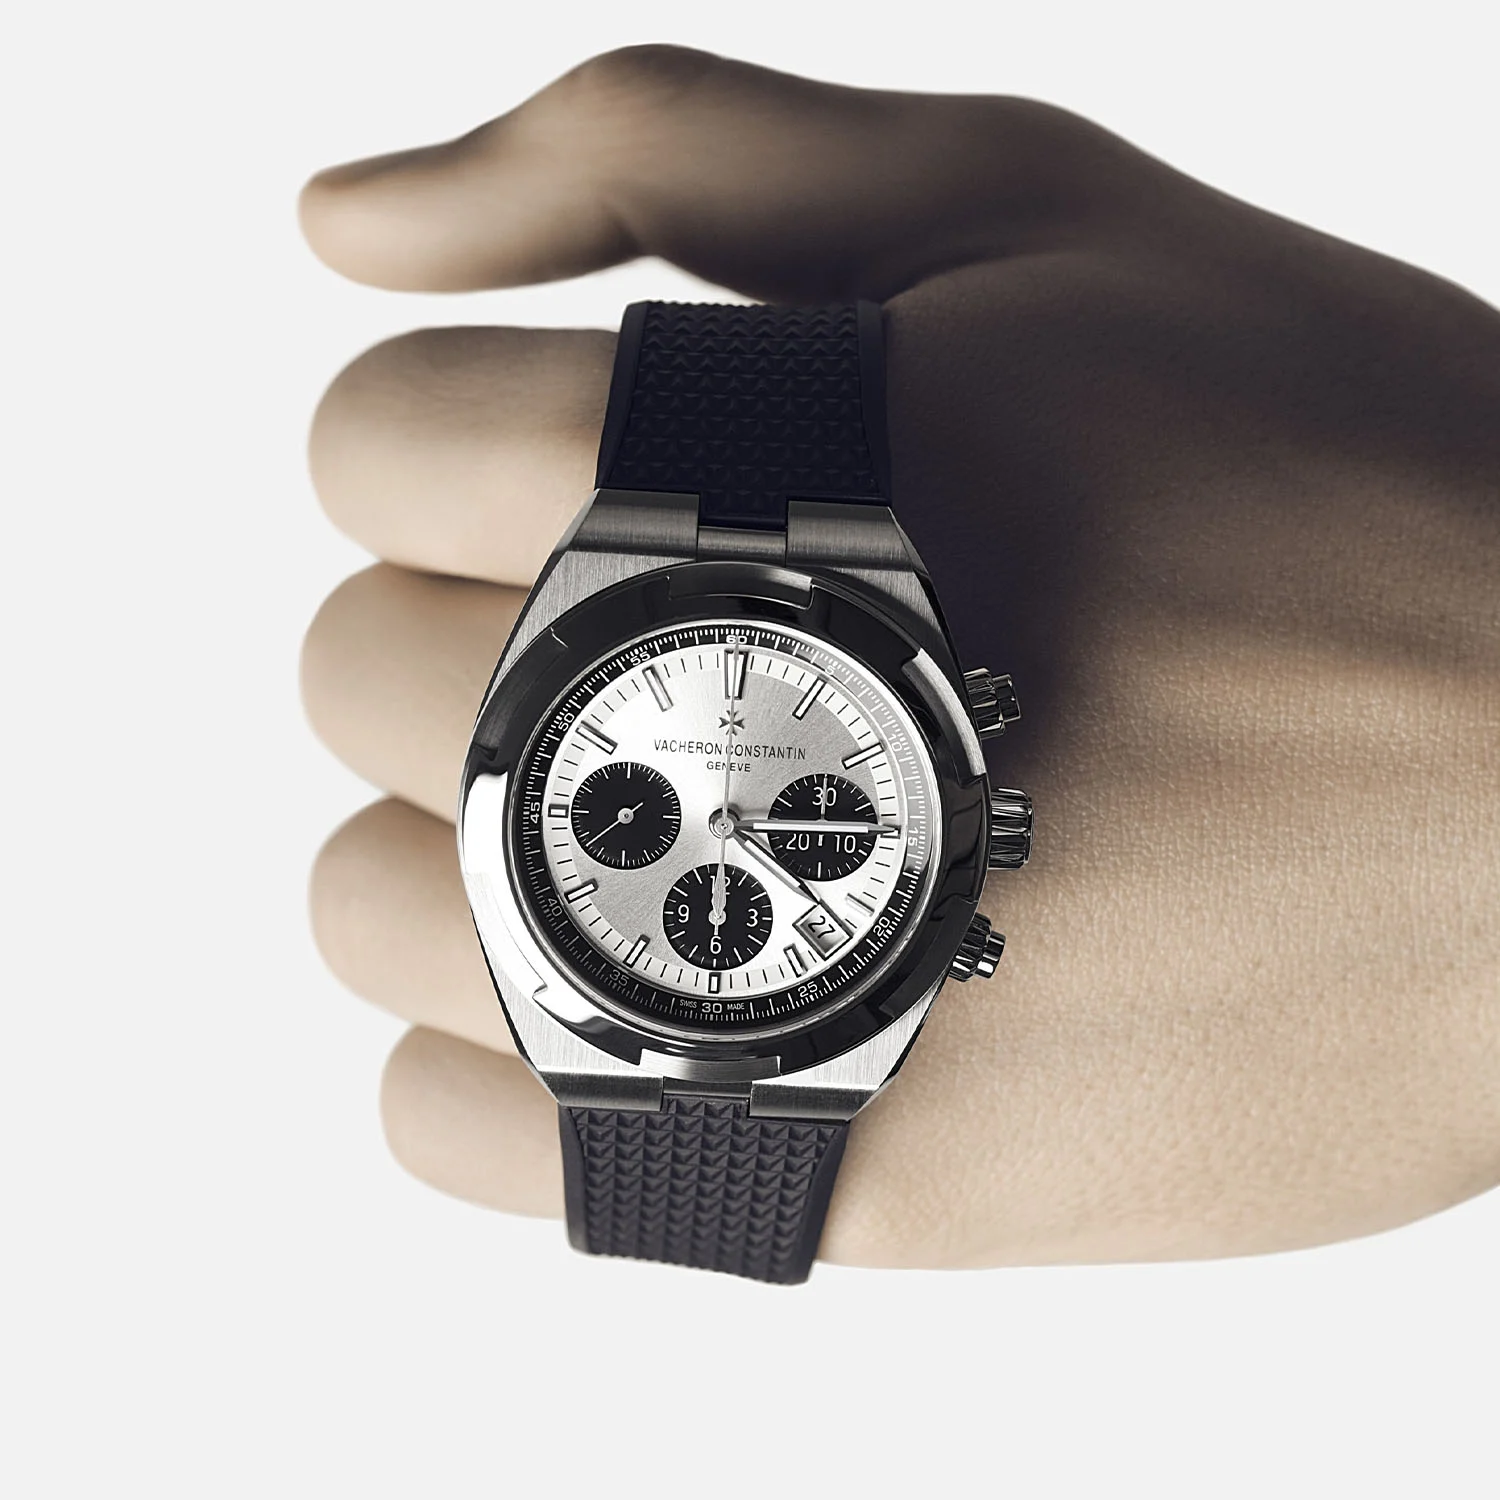 Vacheron Constantin's new panda dial watches are flippin' gorgeous